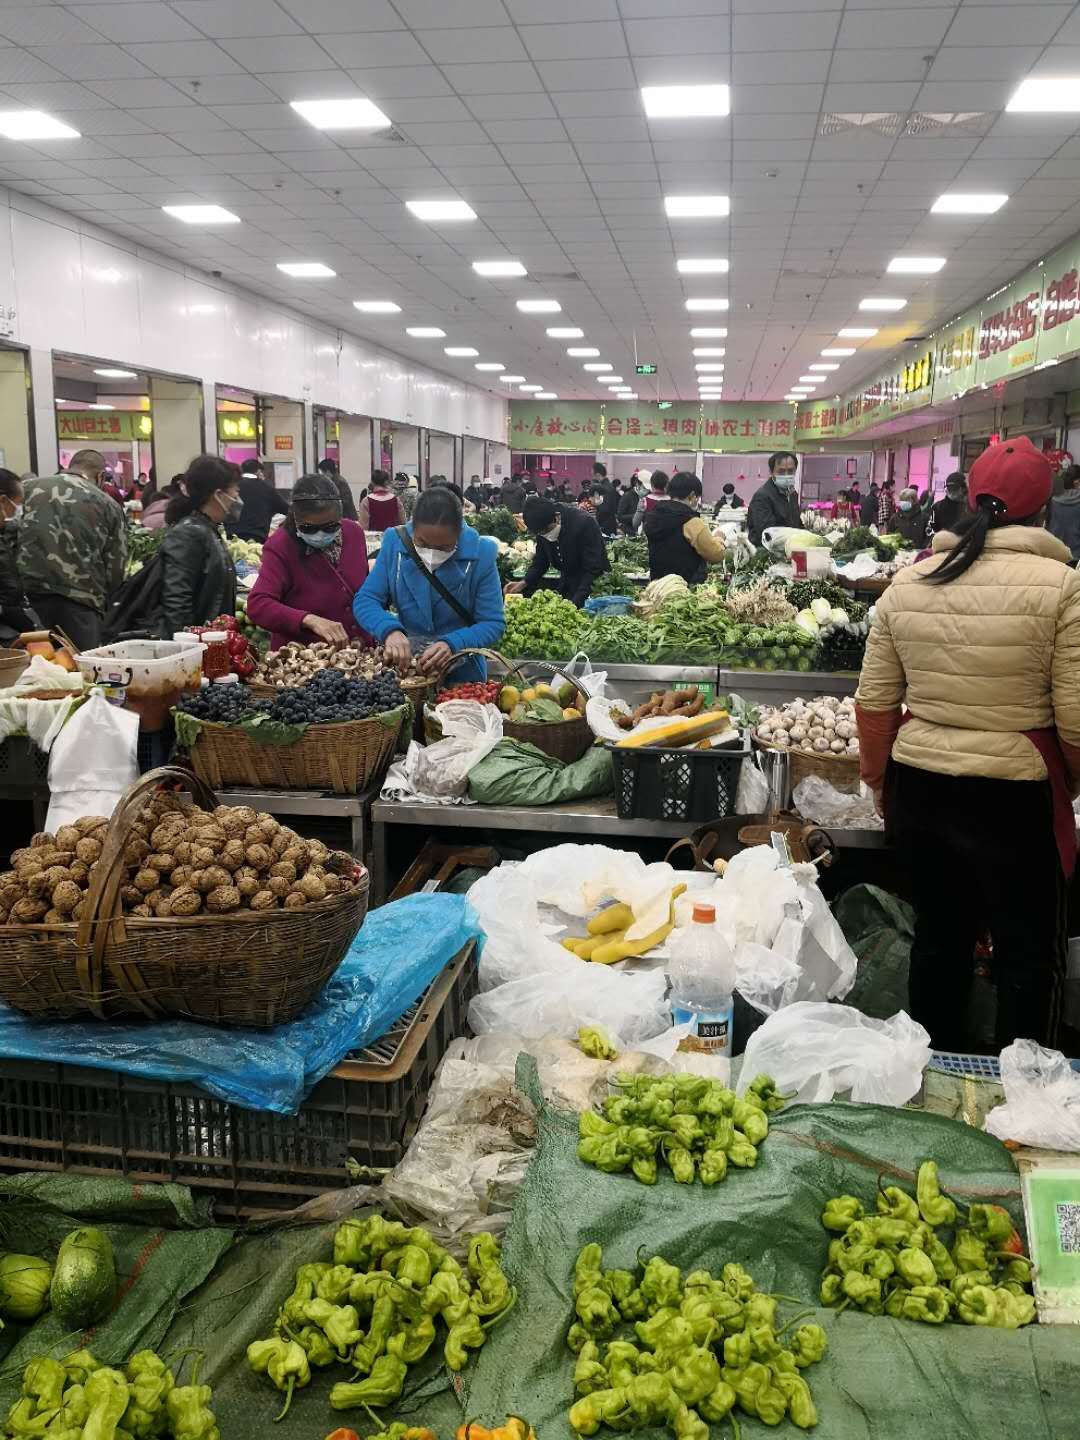 A "wet market" in Kunming, Yunnan, China.